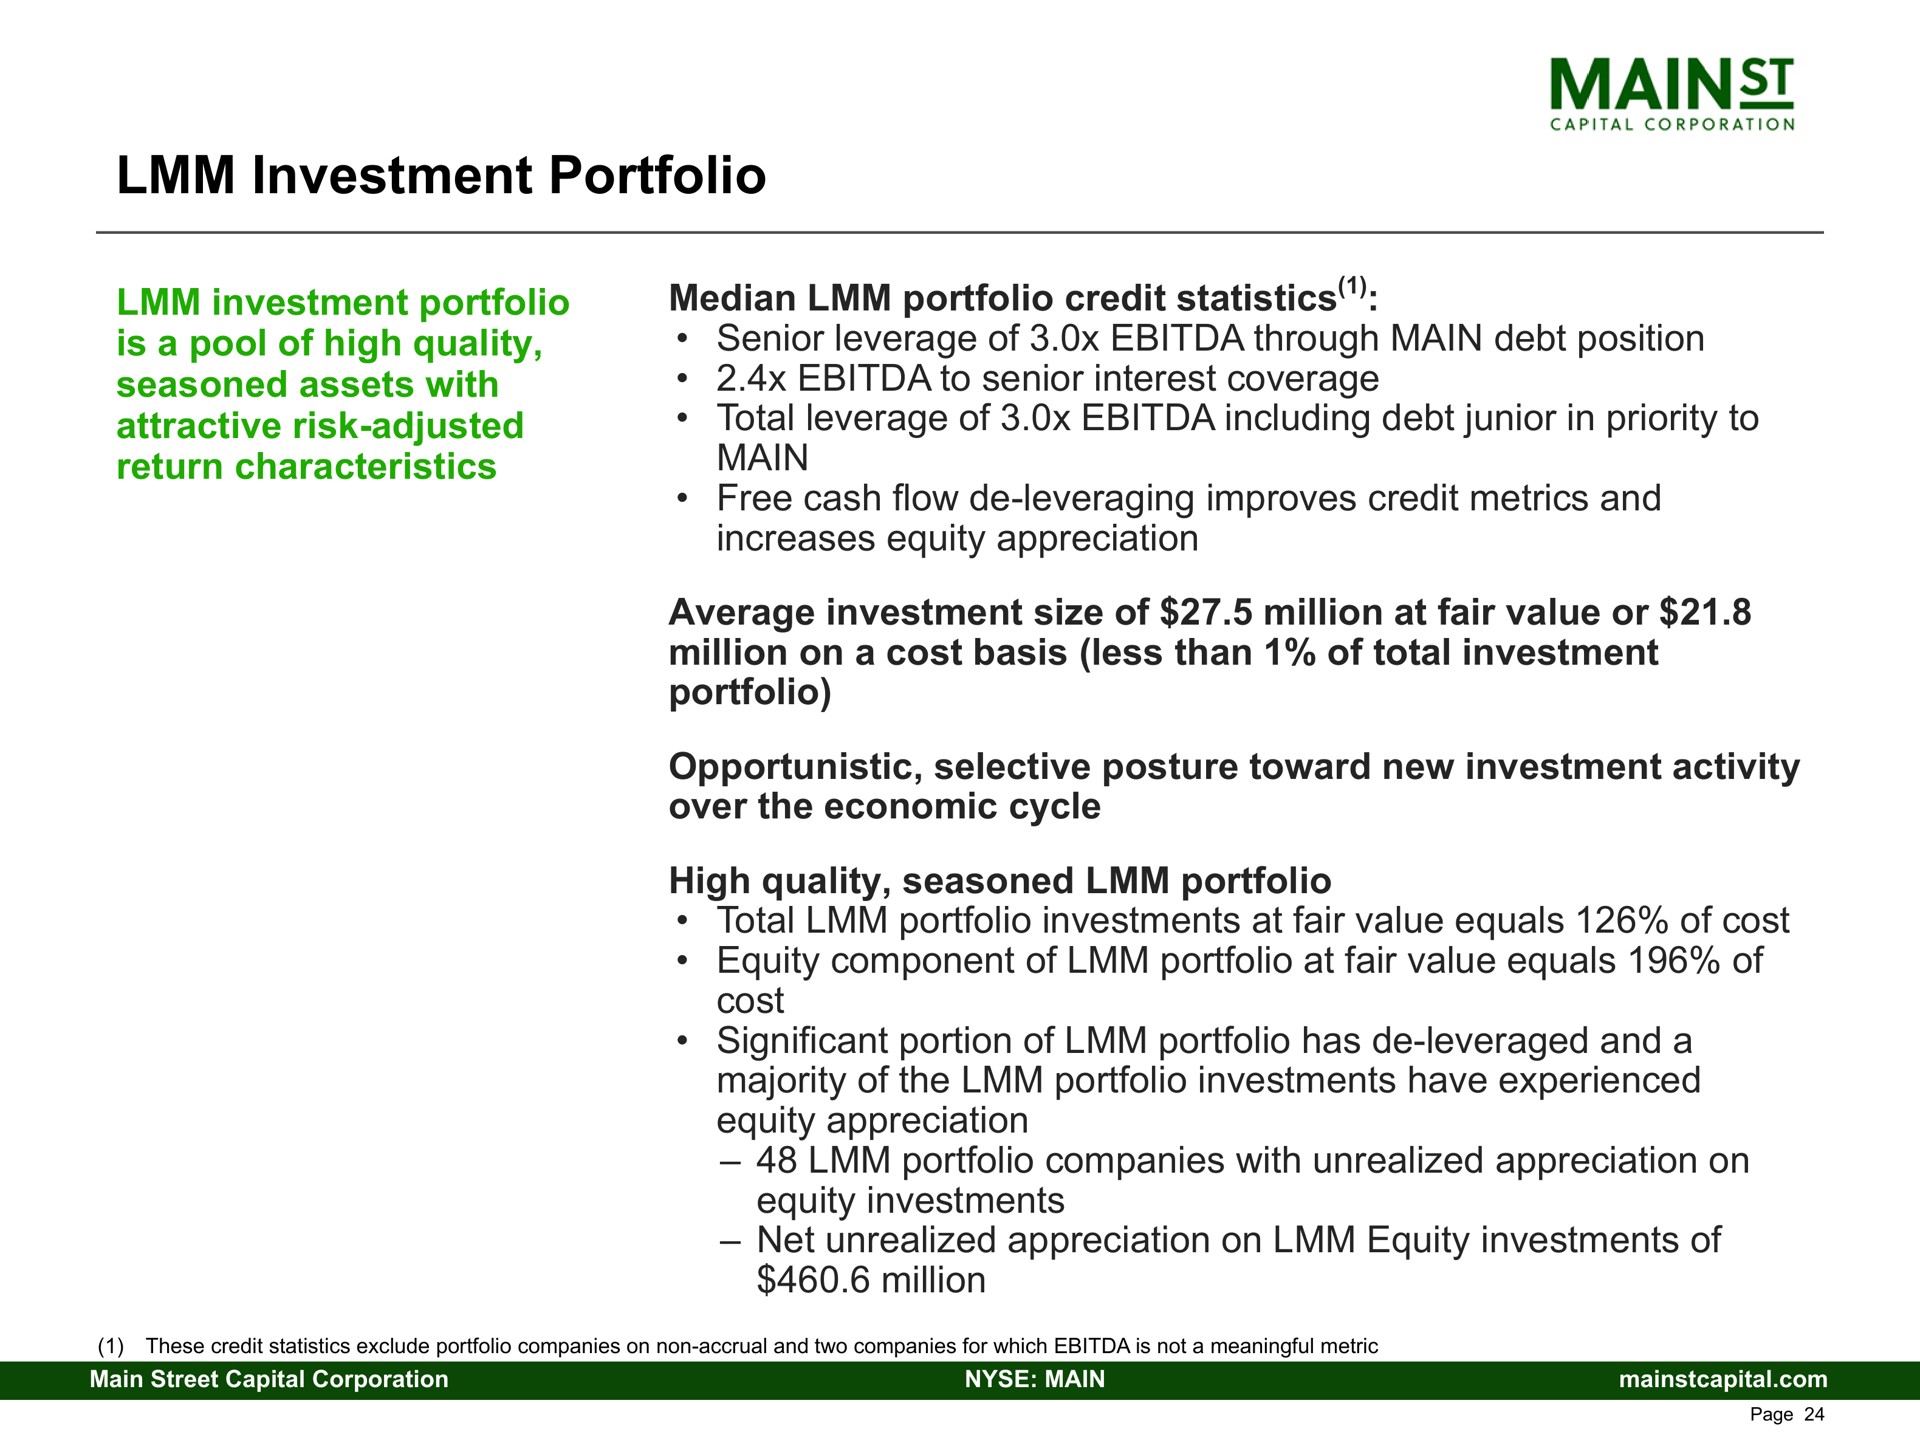 investment portfolio return characteristics median credit statistics main | Main Street Capital